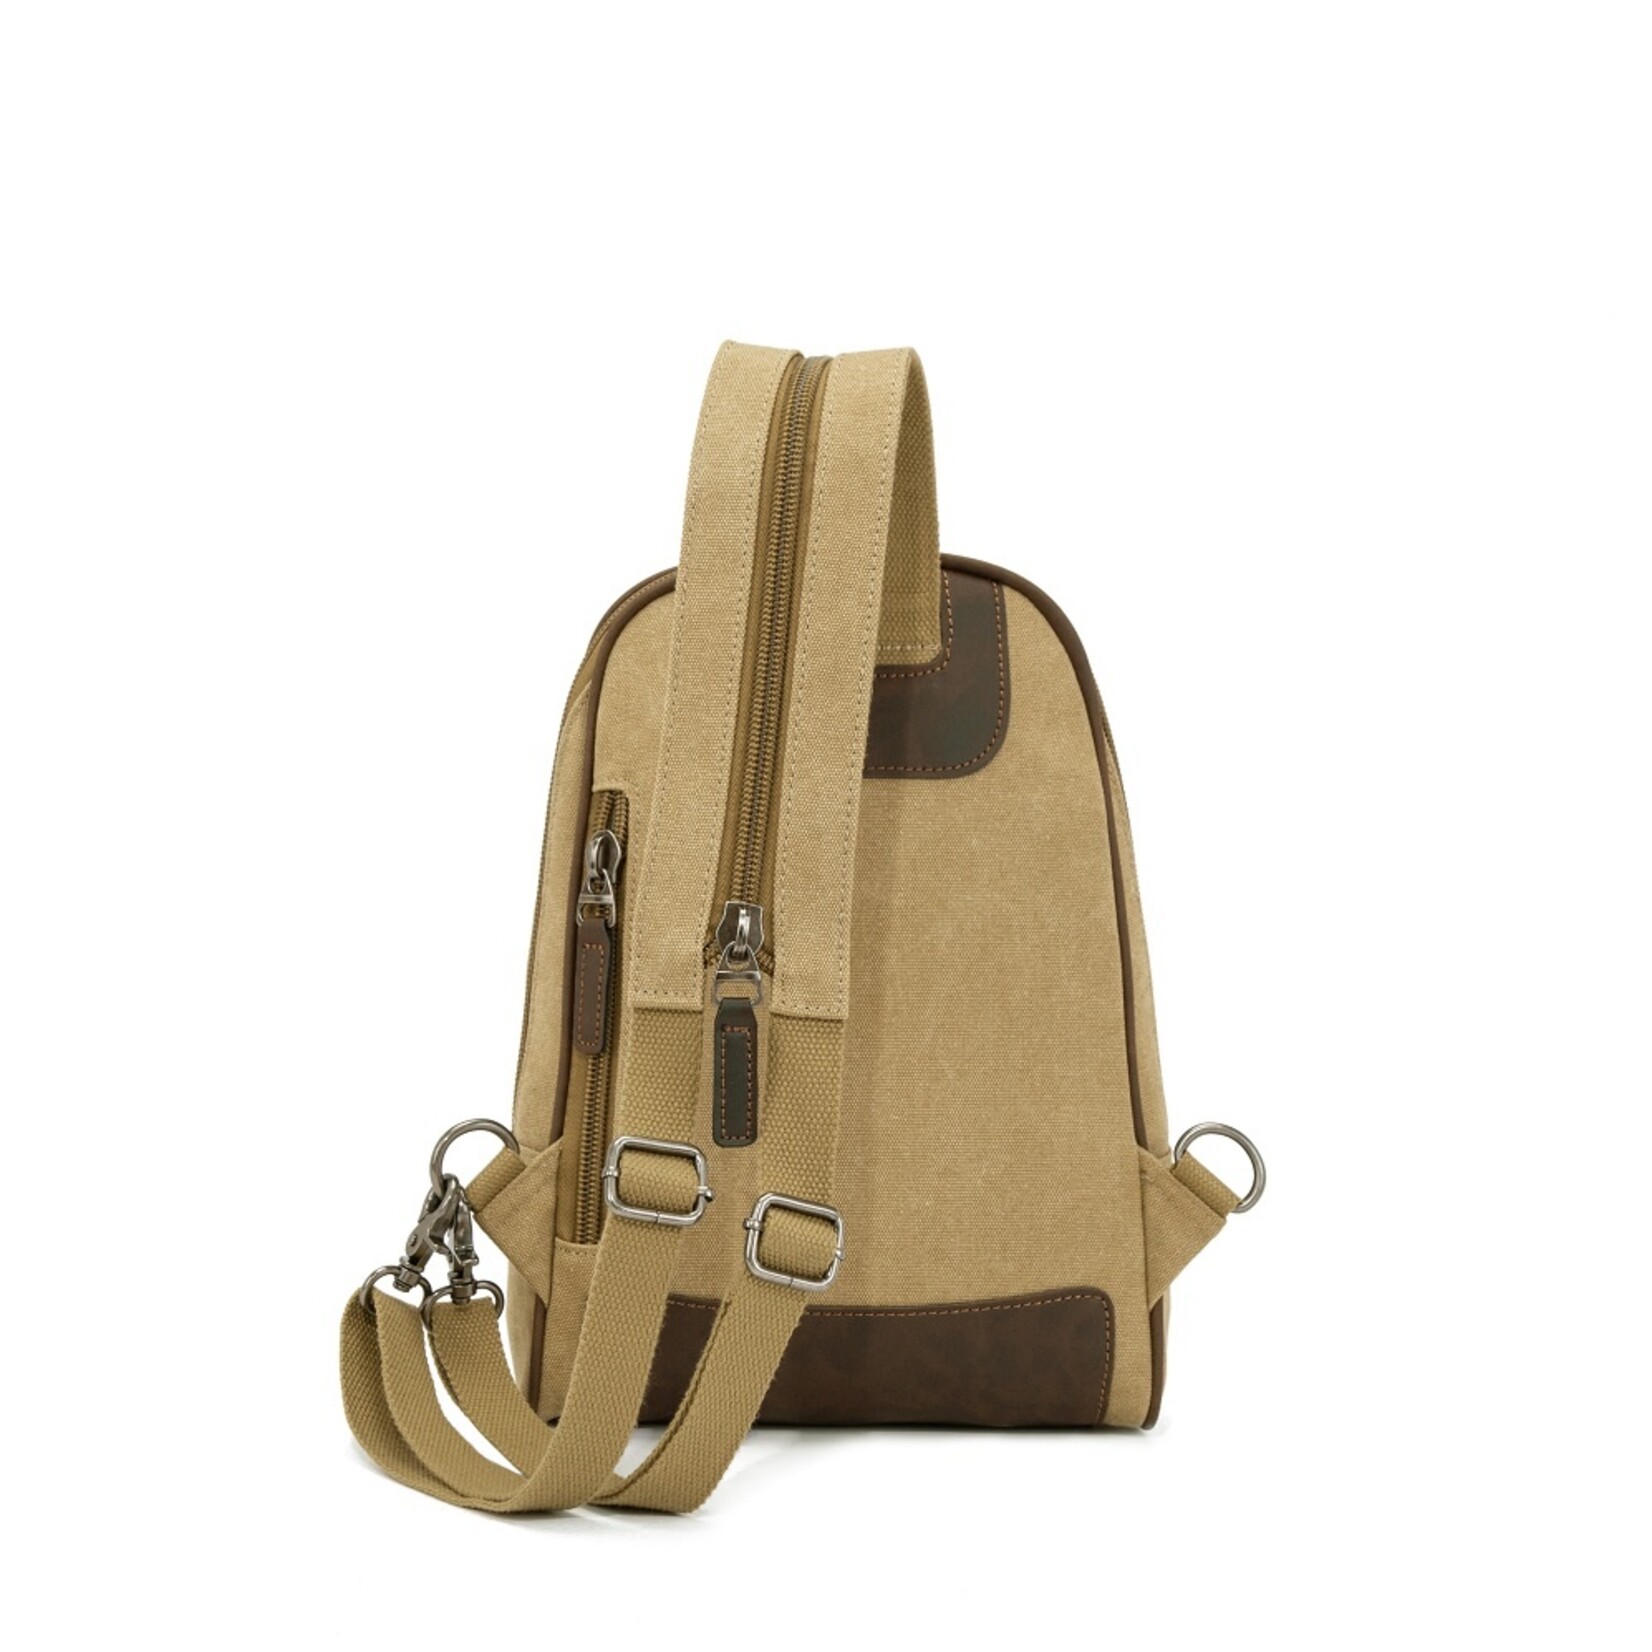 Multifunctional Canvas Backpack Sling Bag - Charcoal